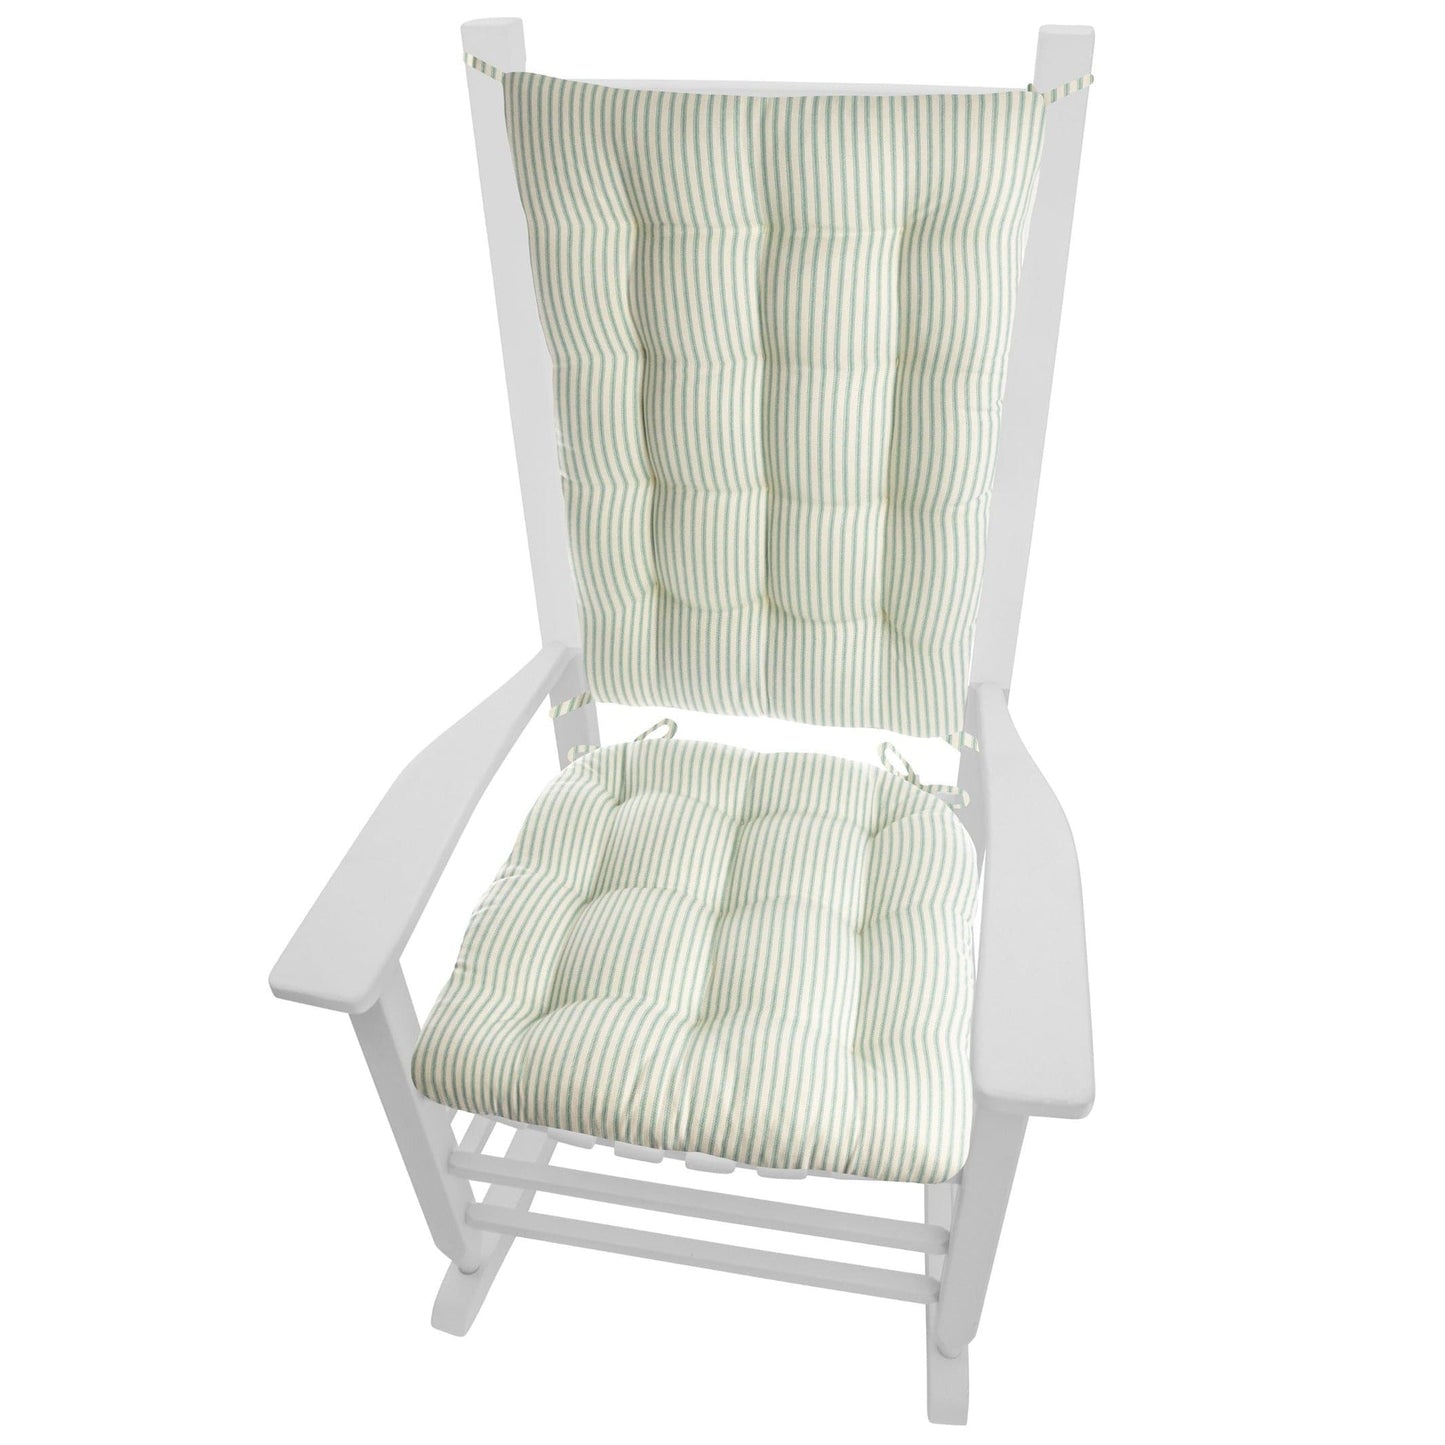 Ticking Stripe Aqua Rocking Chair Cushions | Barnett Home Decor | Aqua & White